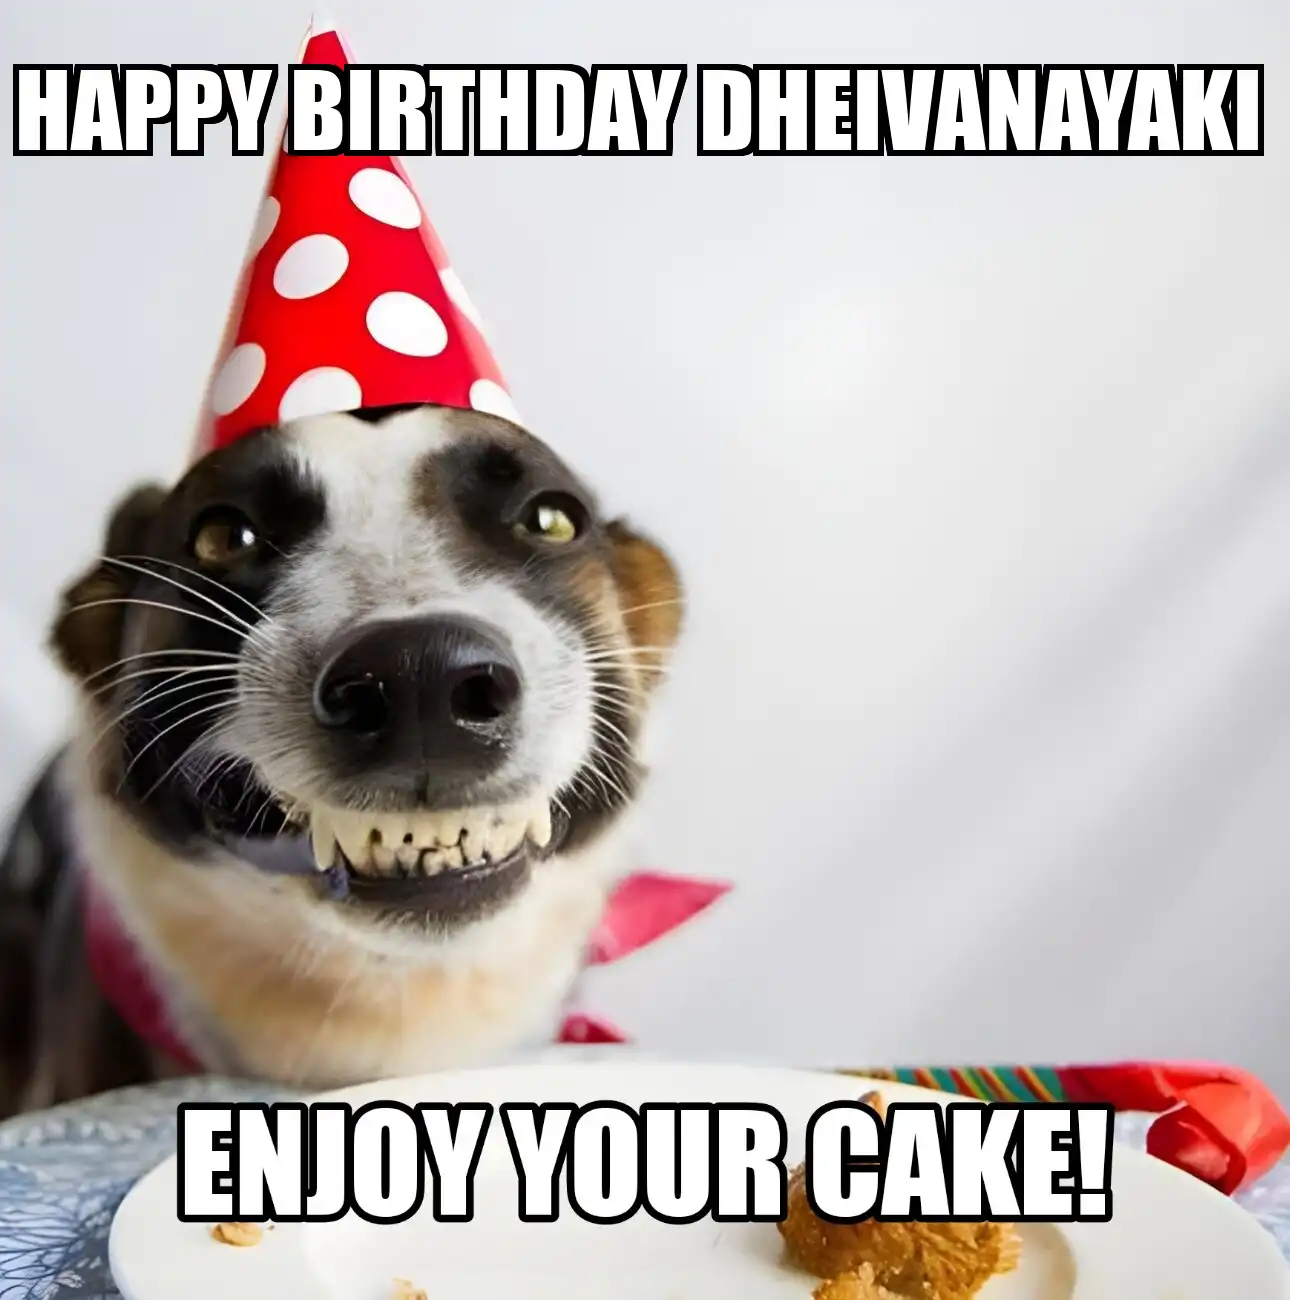 Happy Birthday Dheivanayaki Enjoy Your Cake Dog Meme